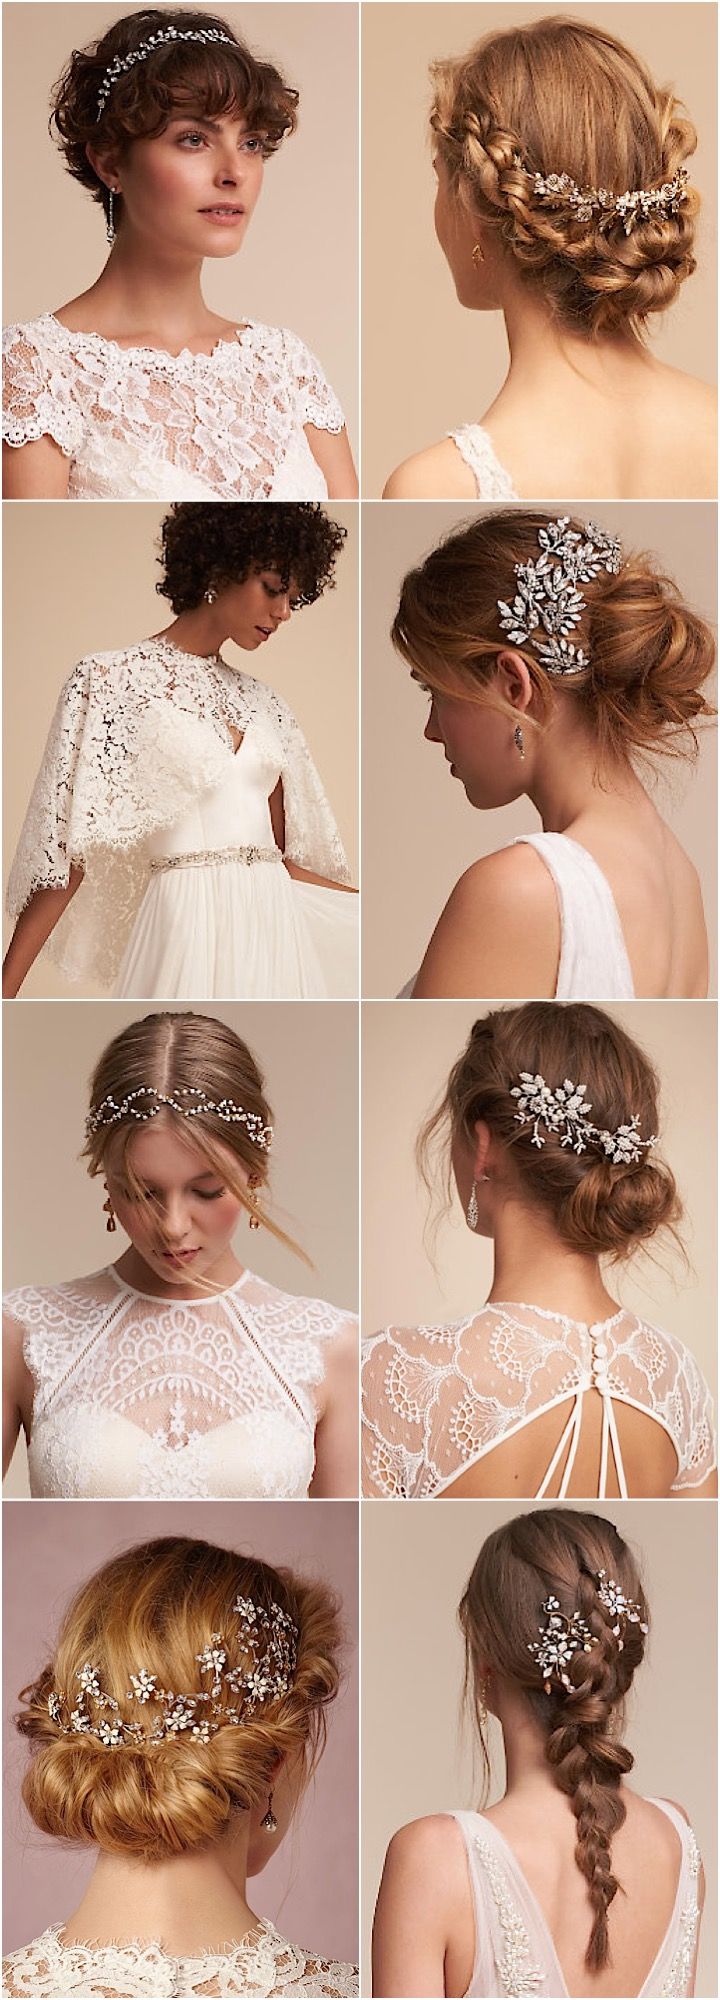 BHLDN winter wedding hair accessory ideas...